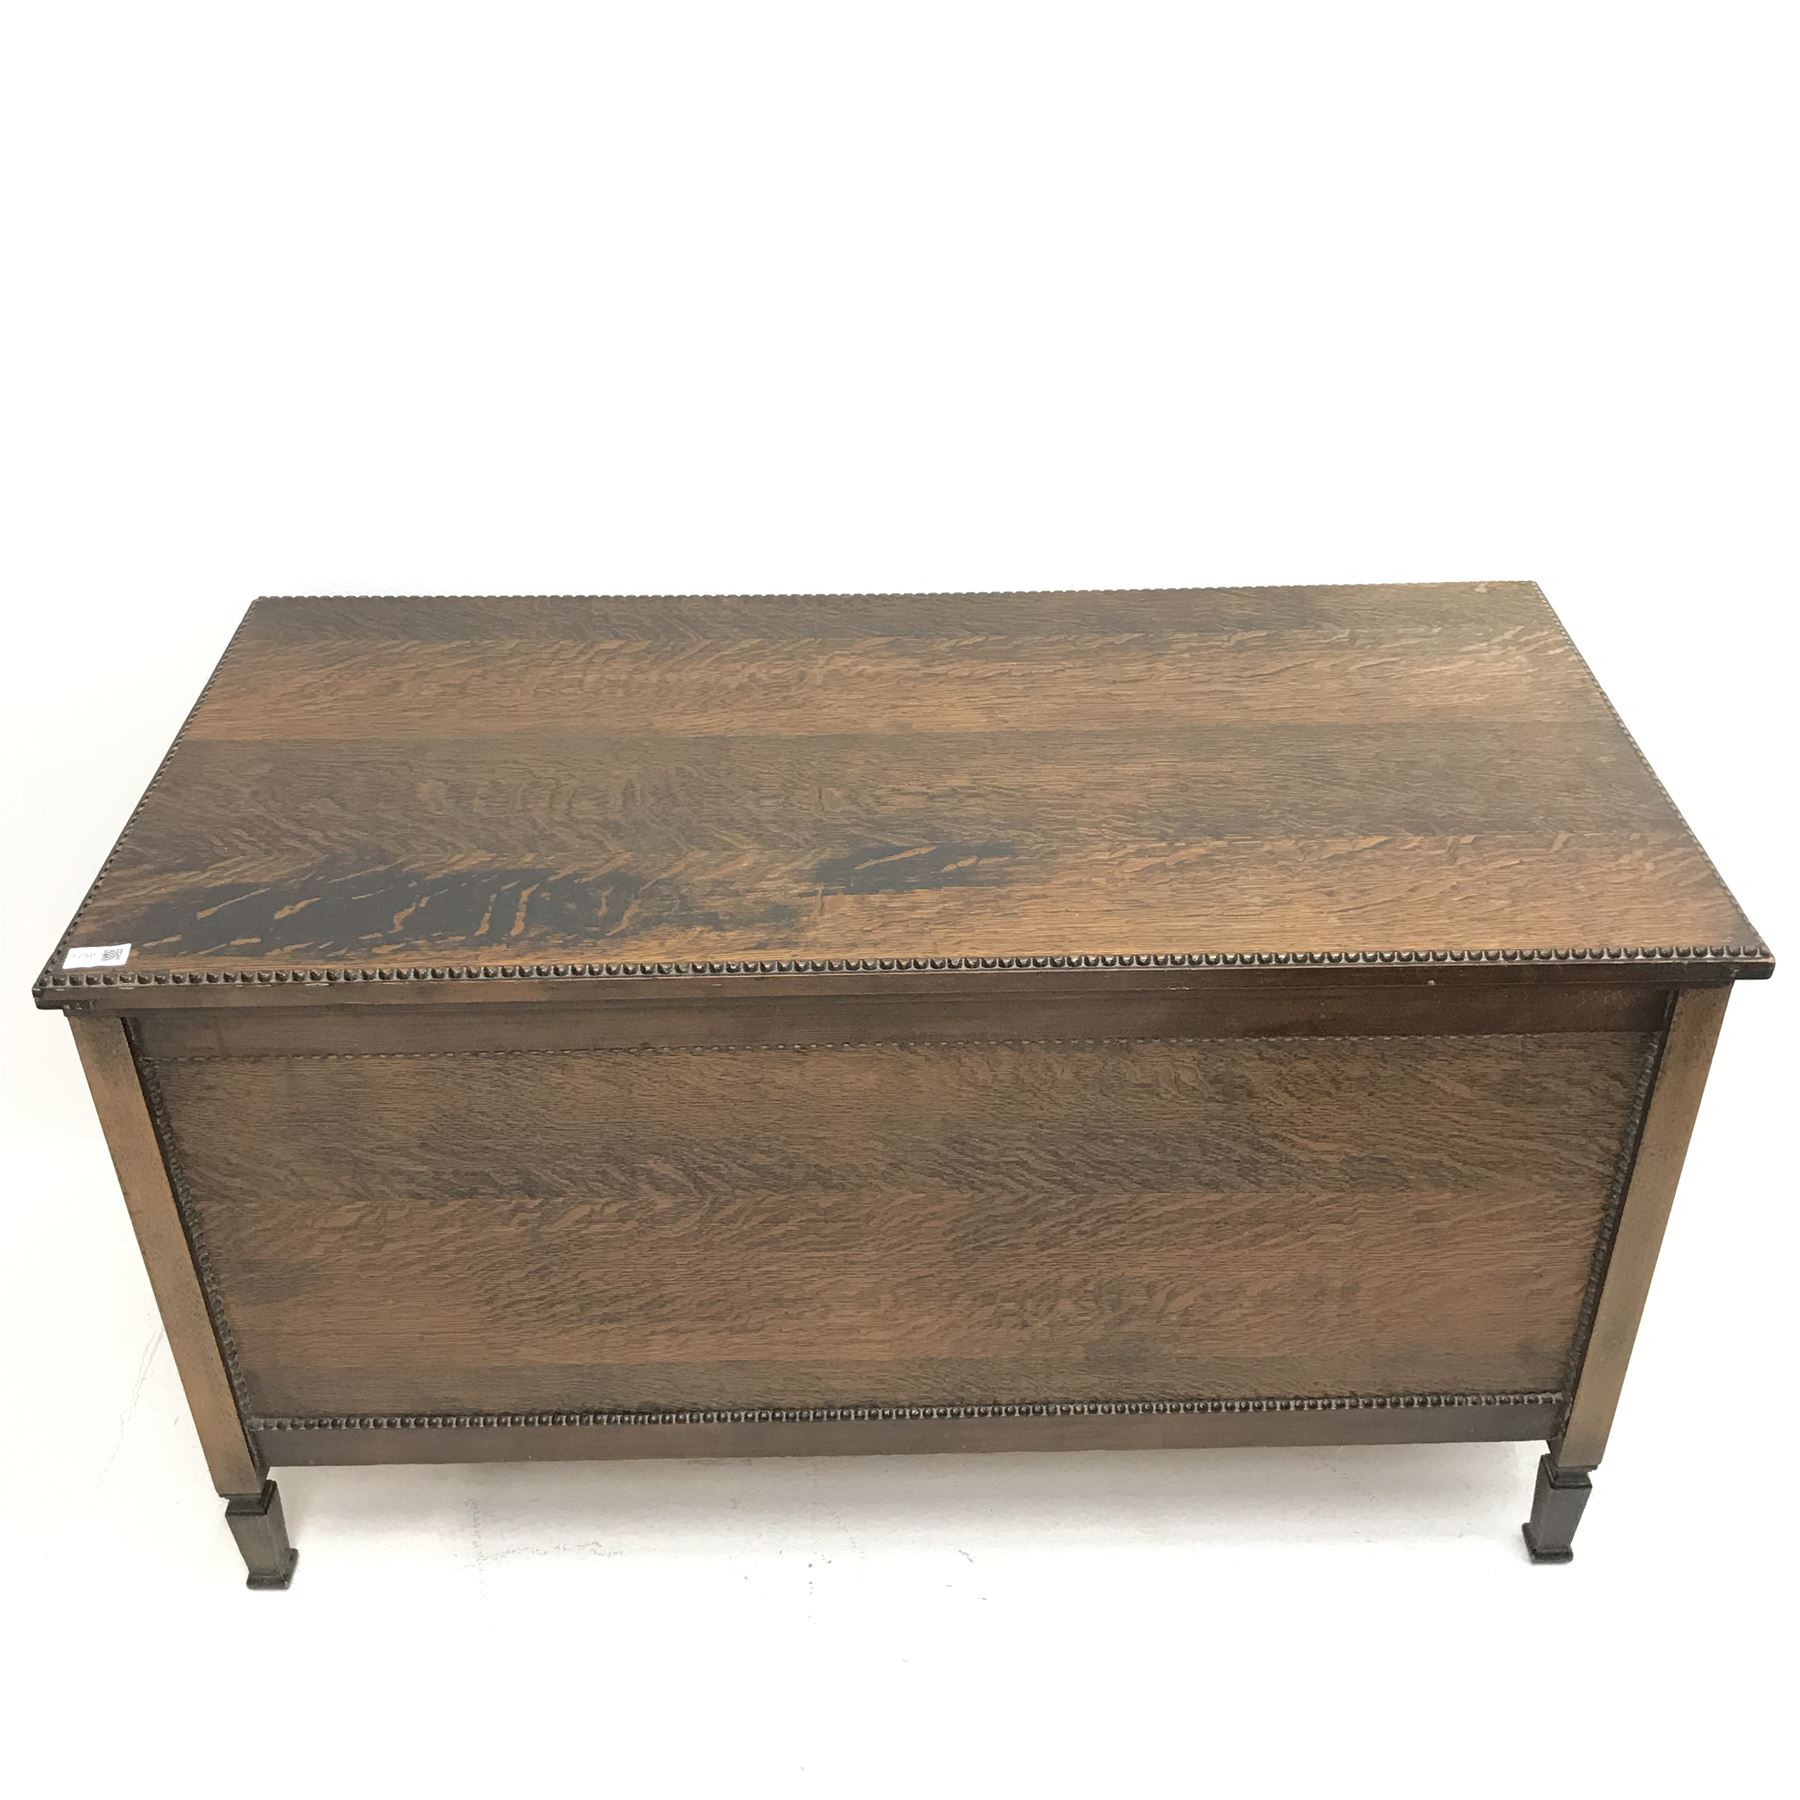 Early 20th century oak blanket box, single hinged lid, W110cm, H63cm, D55cm - Image 4 of 5